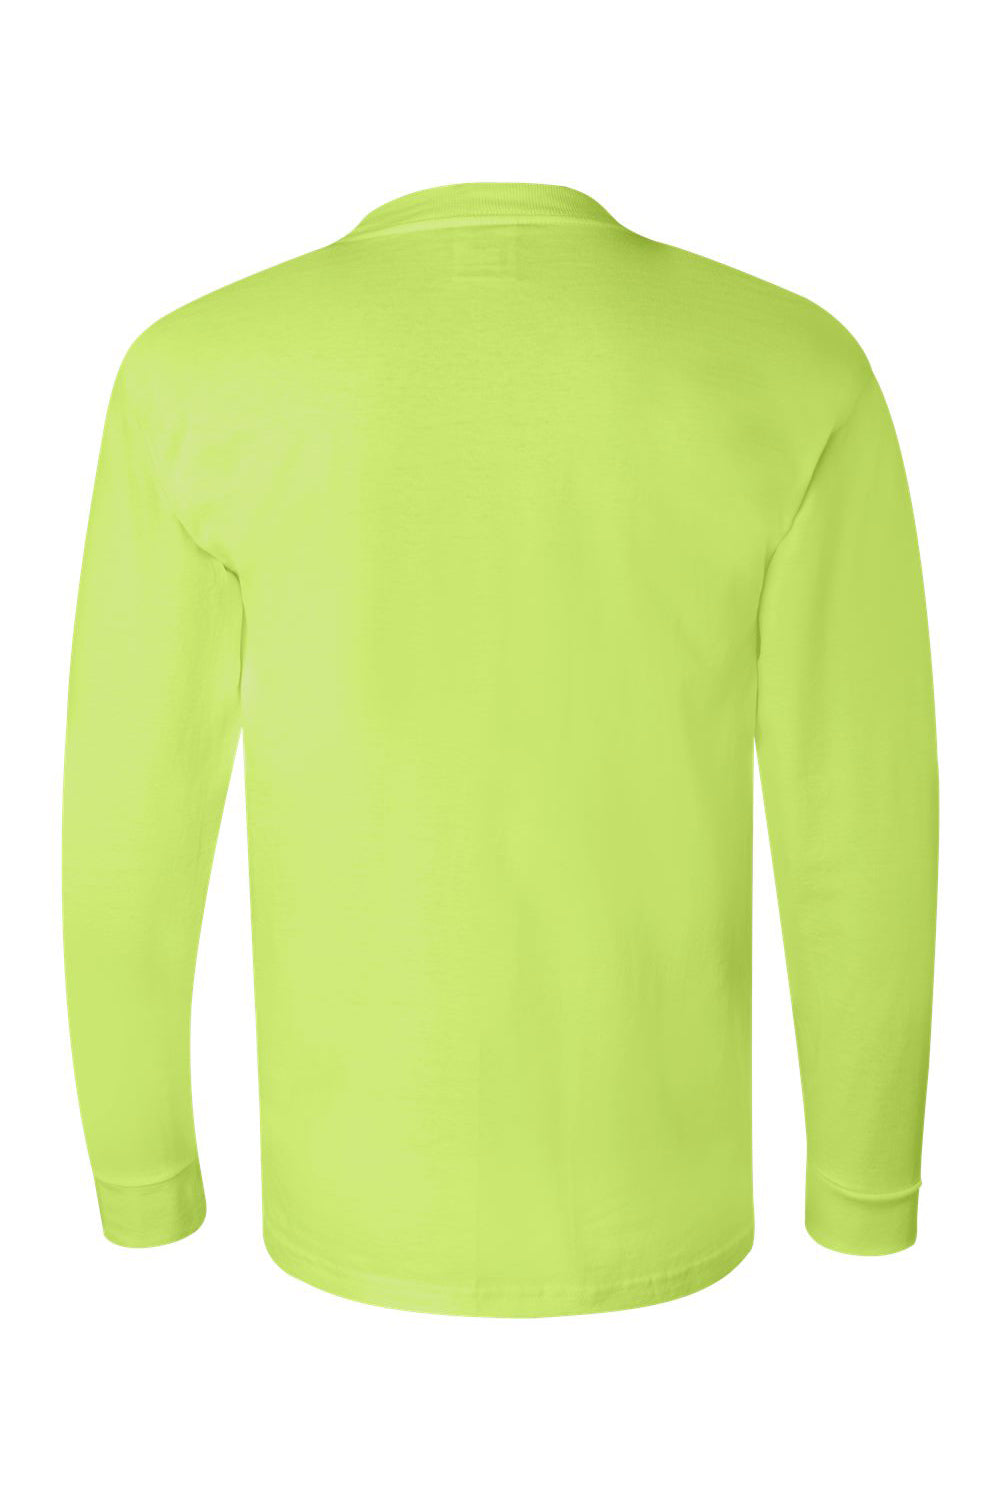 Bayside BA6100 Mens USA Made Long Sleeve Crewneck T-Shirt Lime Green Flat Back